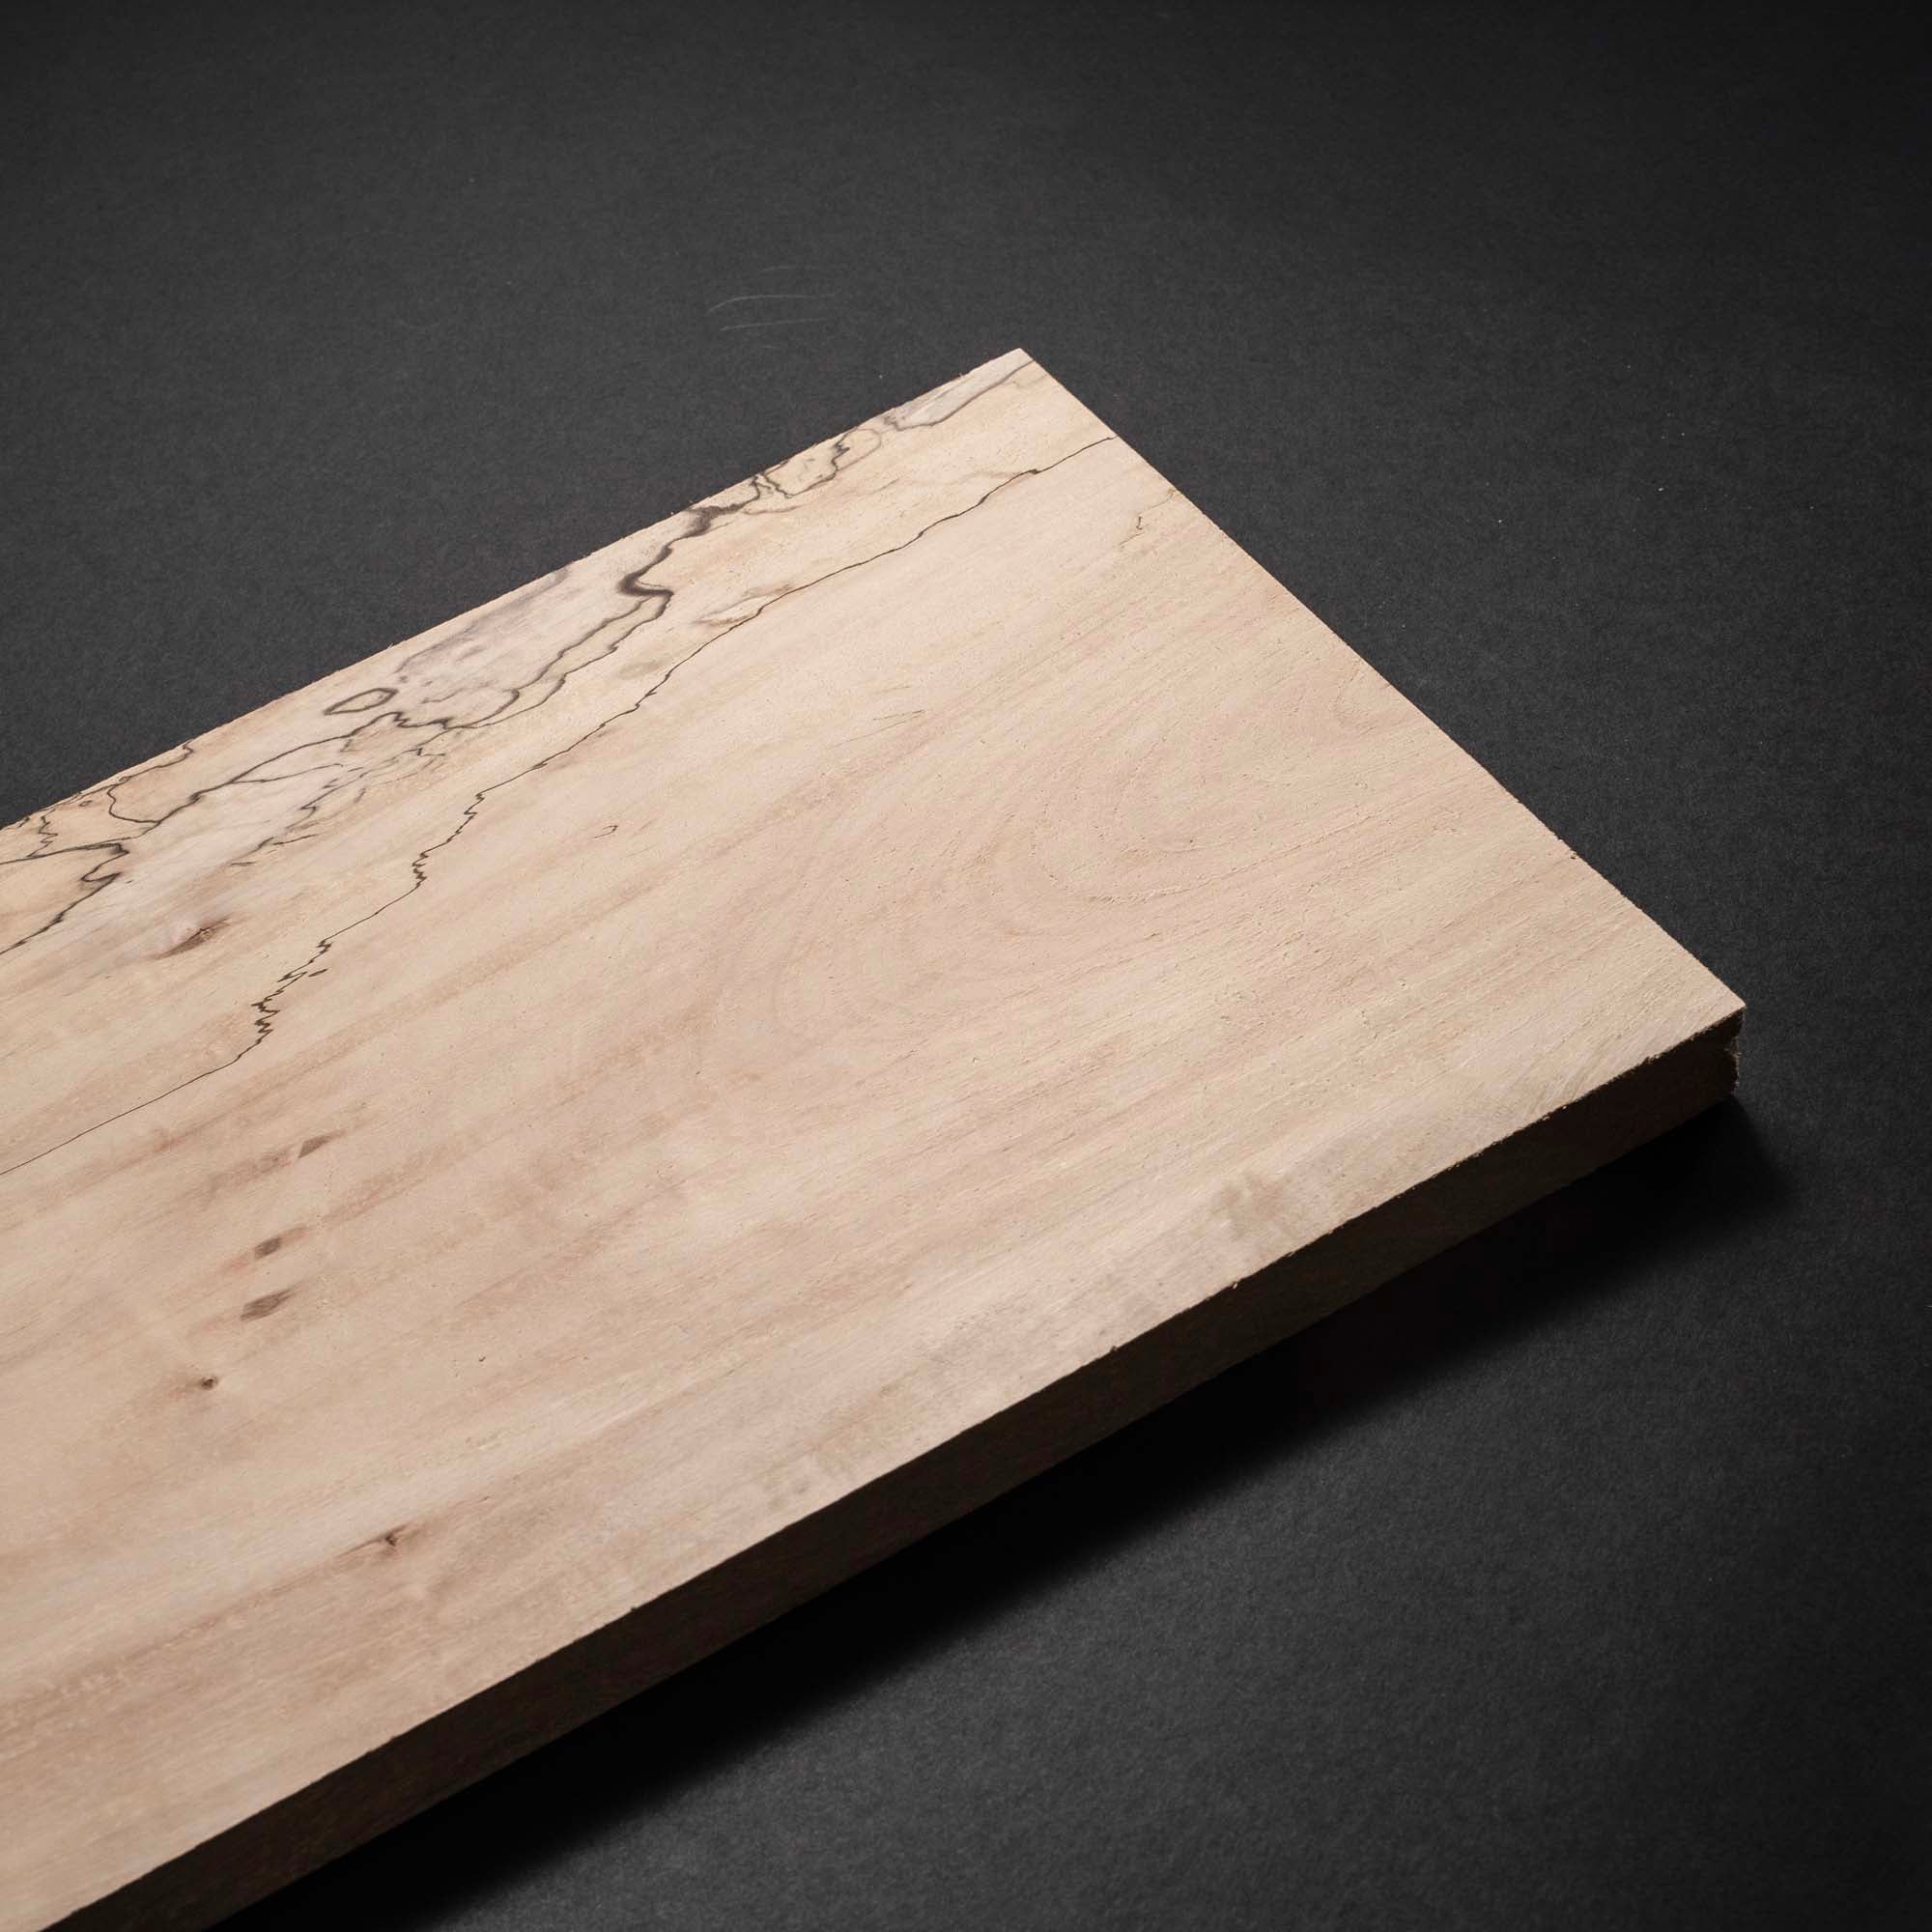 Solid Maple Wood Slat Plank 1/4 X 3 X 12 Long Woodworking Laser 